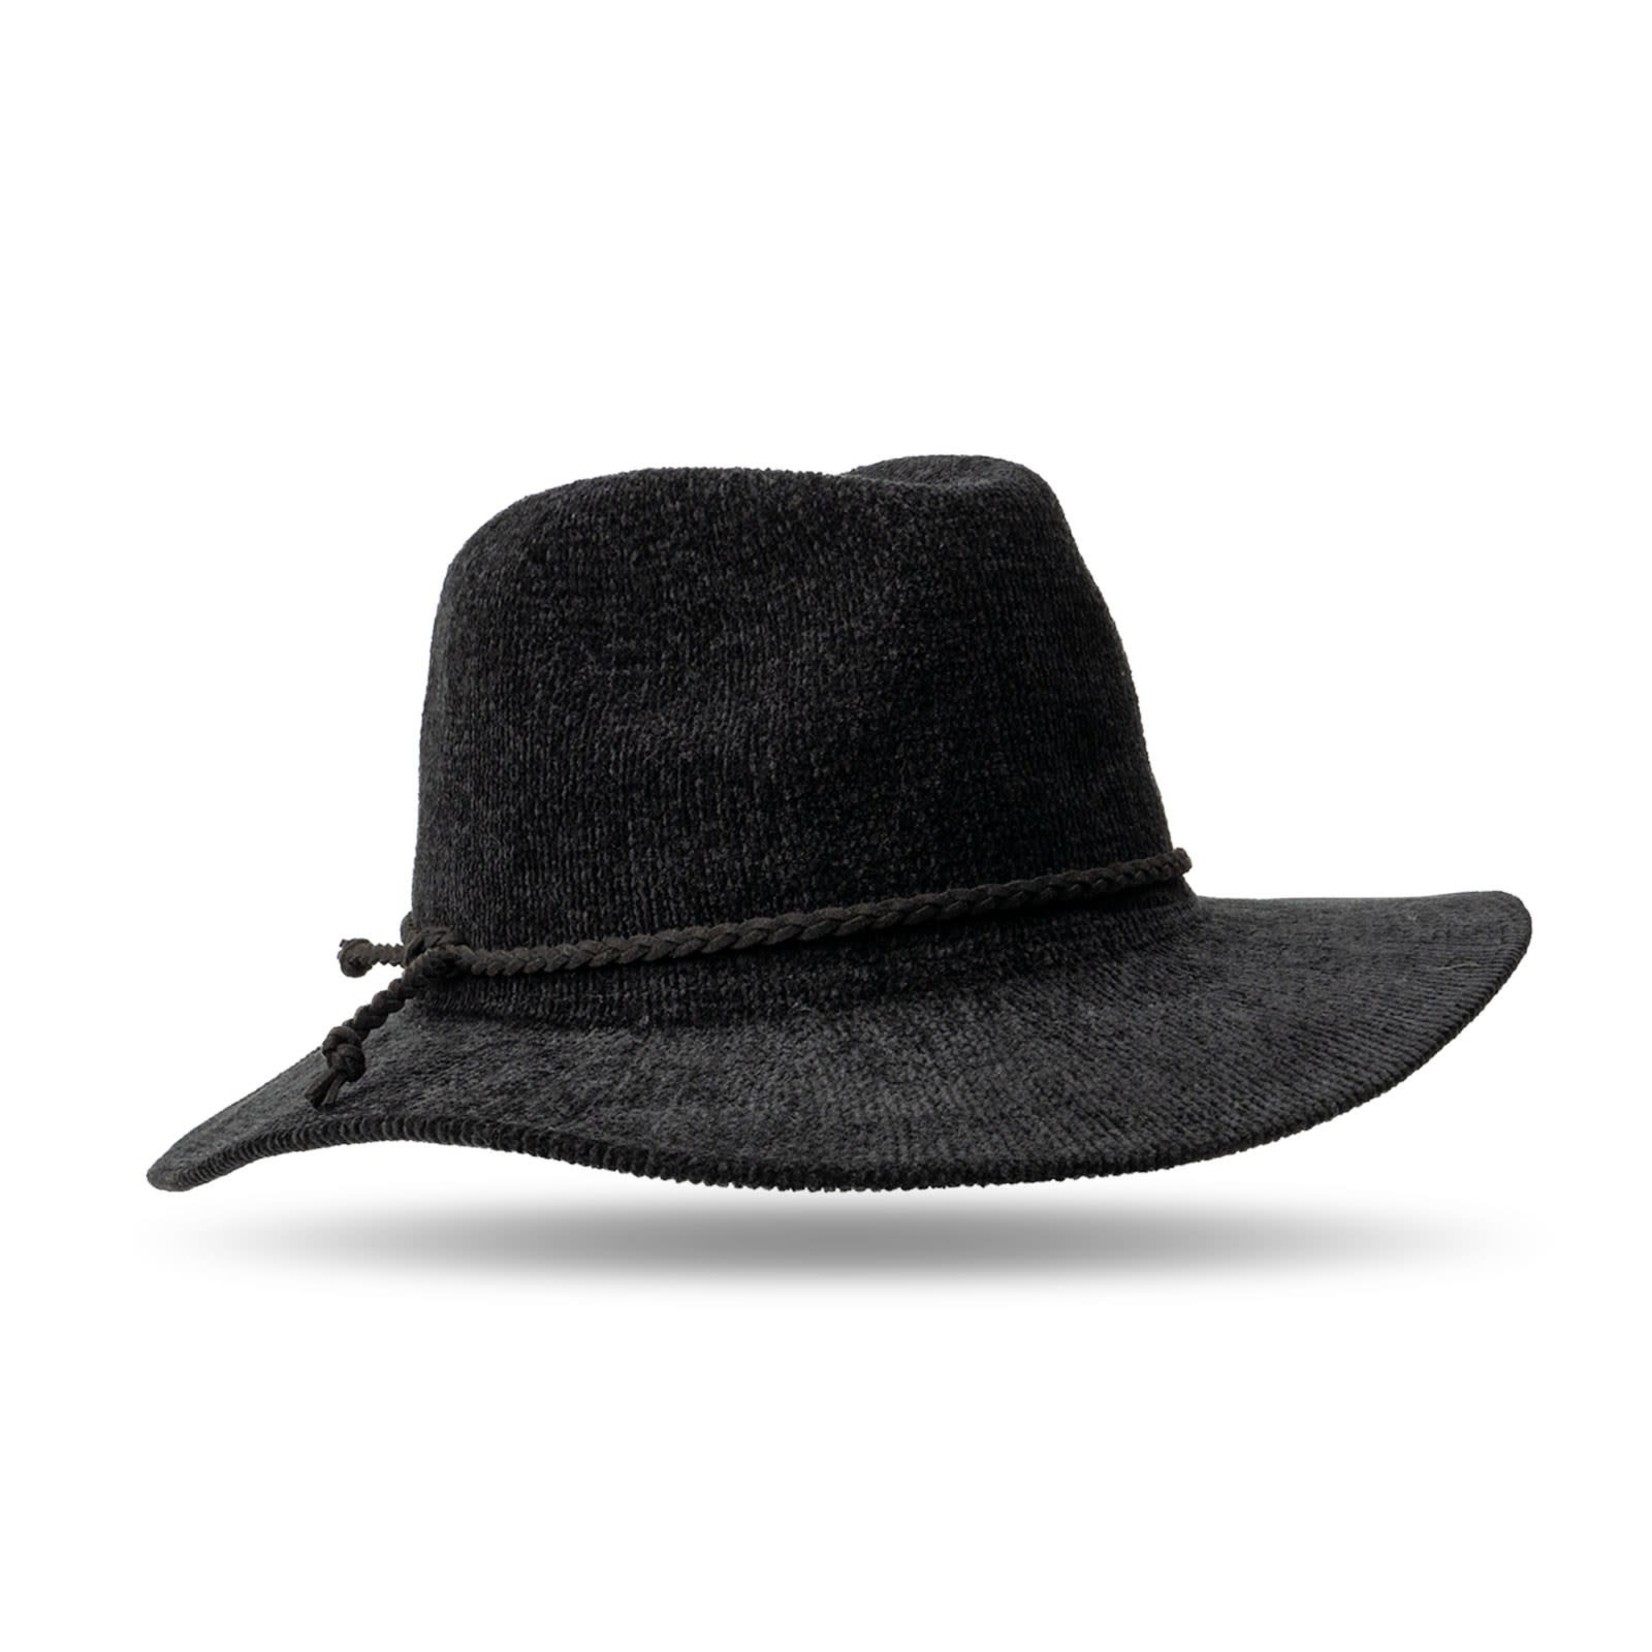 Britt's Knits Getaway Foldable Panama Hat